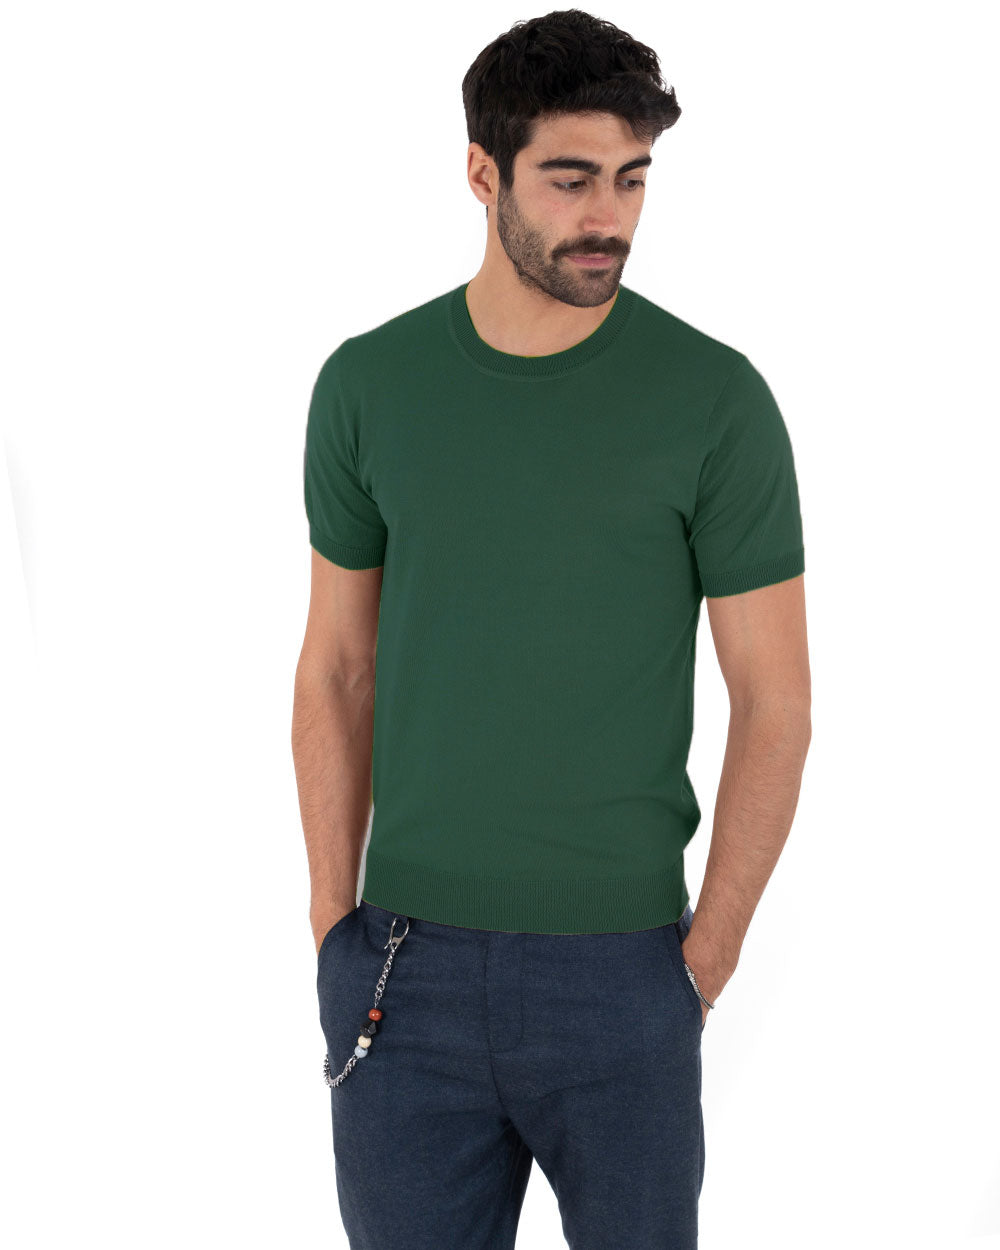 T-Shirt Uomo Manica Corta Tinta Unita Verde Bottiglia Girocollo Filo Casual GIOSAL-TS3051A